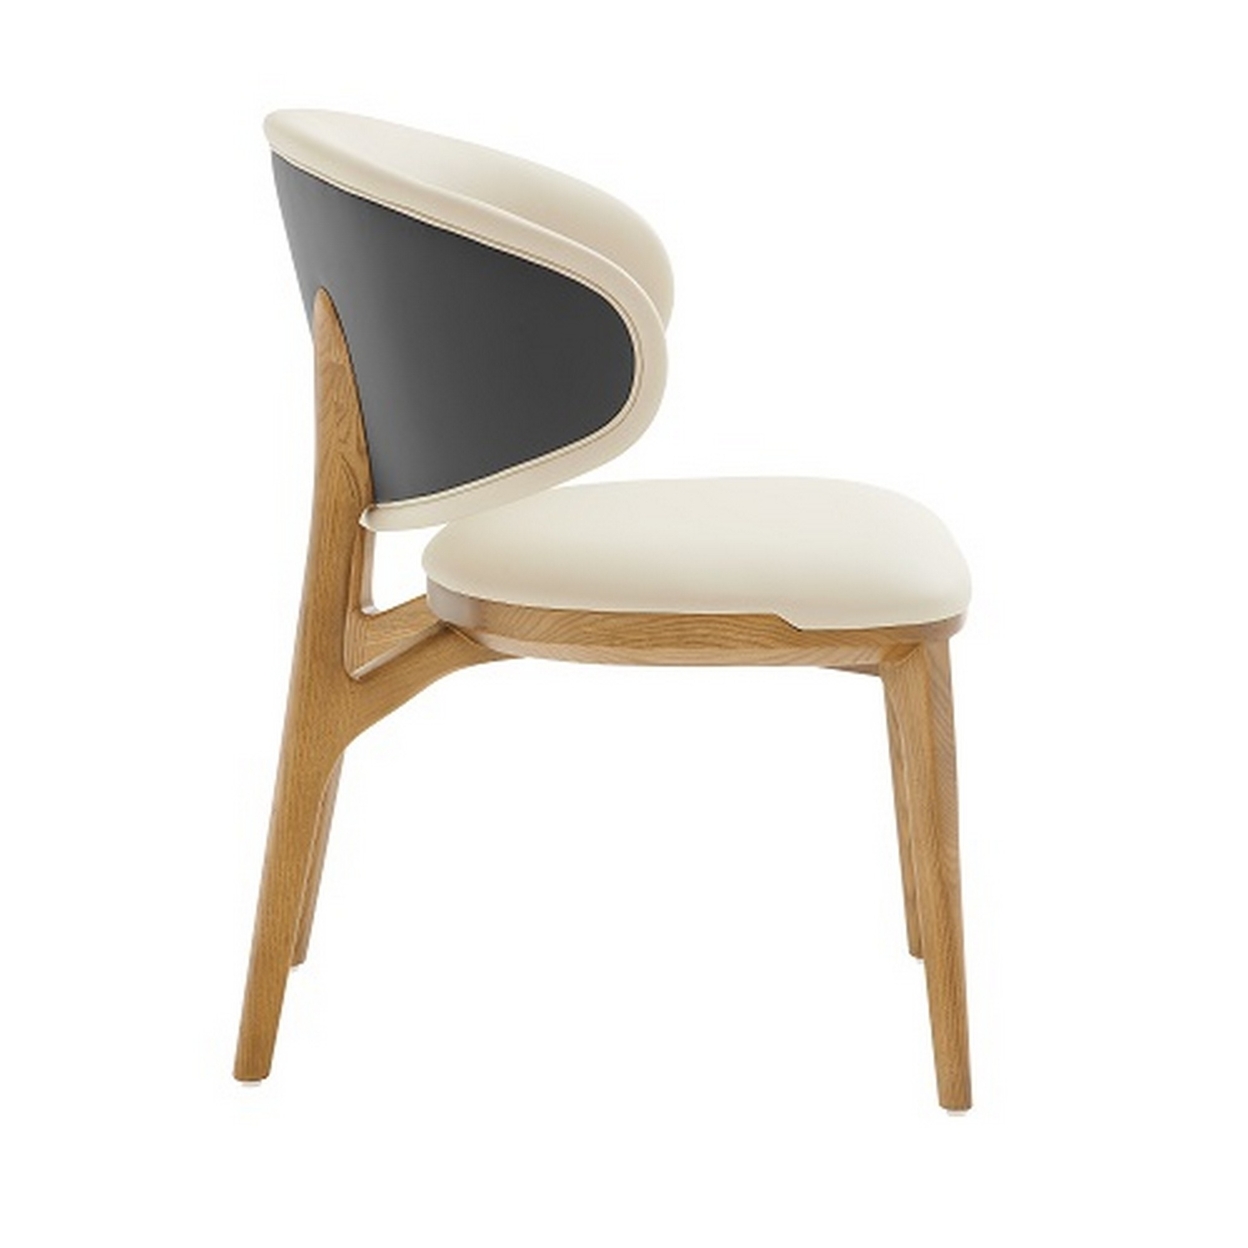 Cid 22 Inch Dining Chair, Curved Backrest, Vegan Faux Leather, Cream Fabric- Saltoro Sherpi